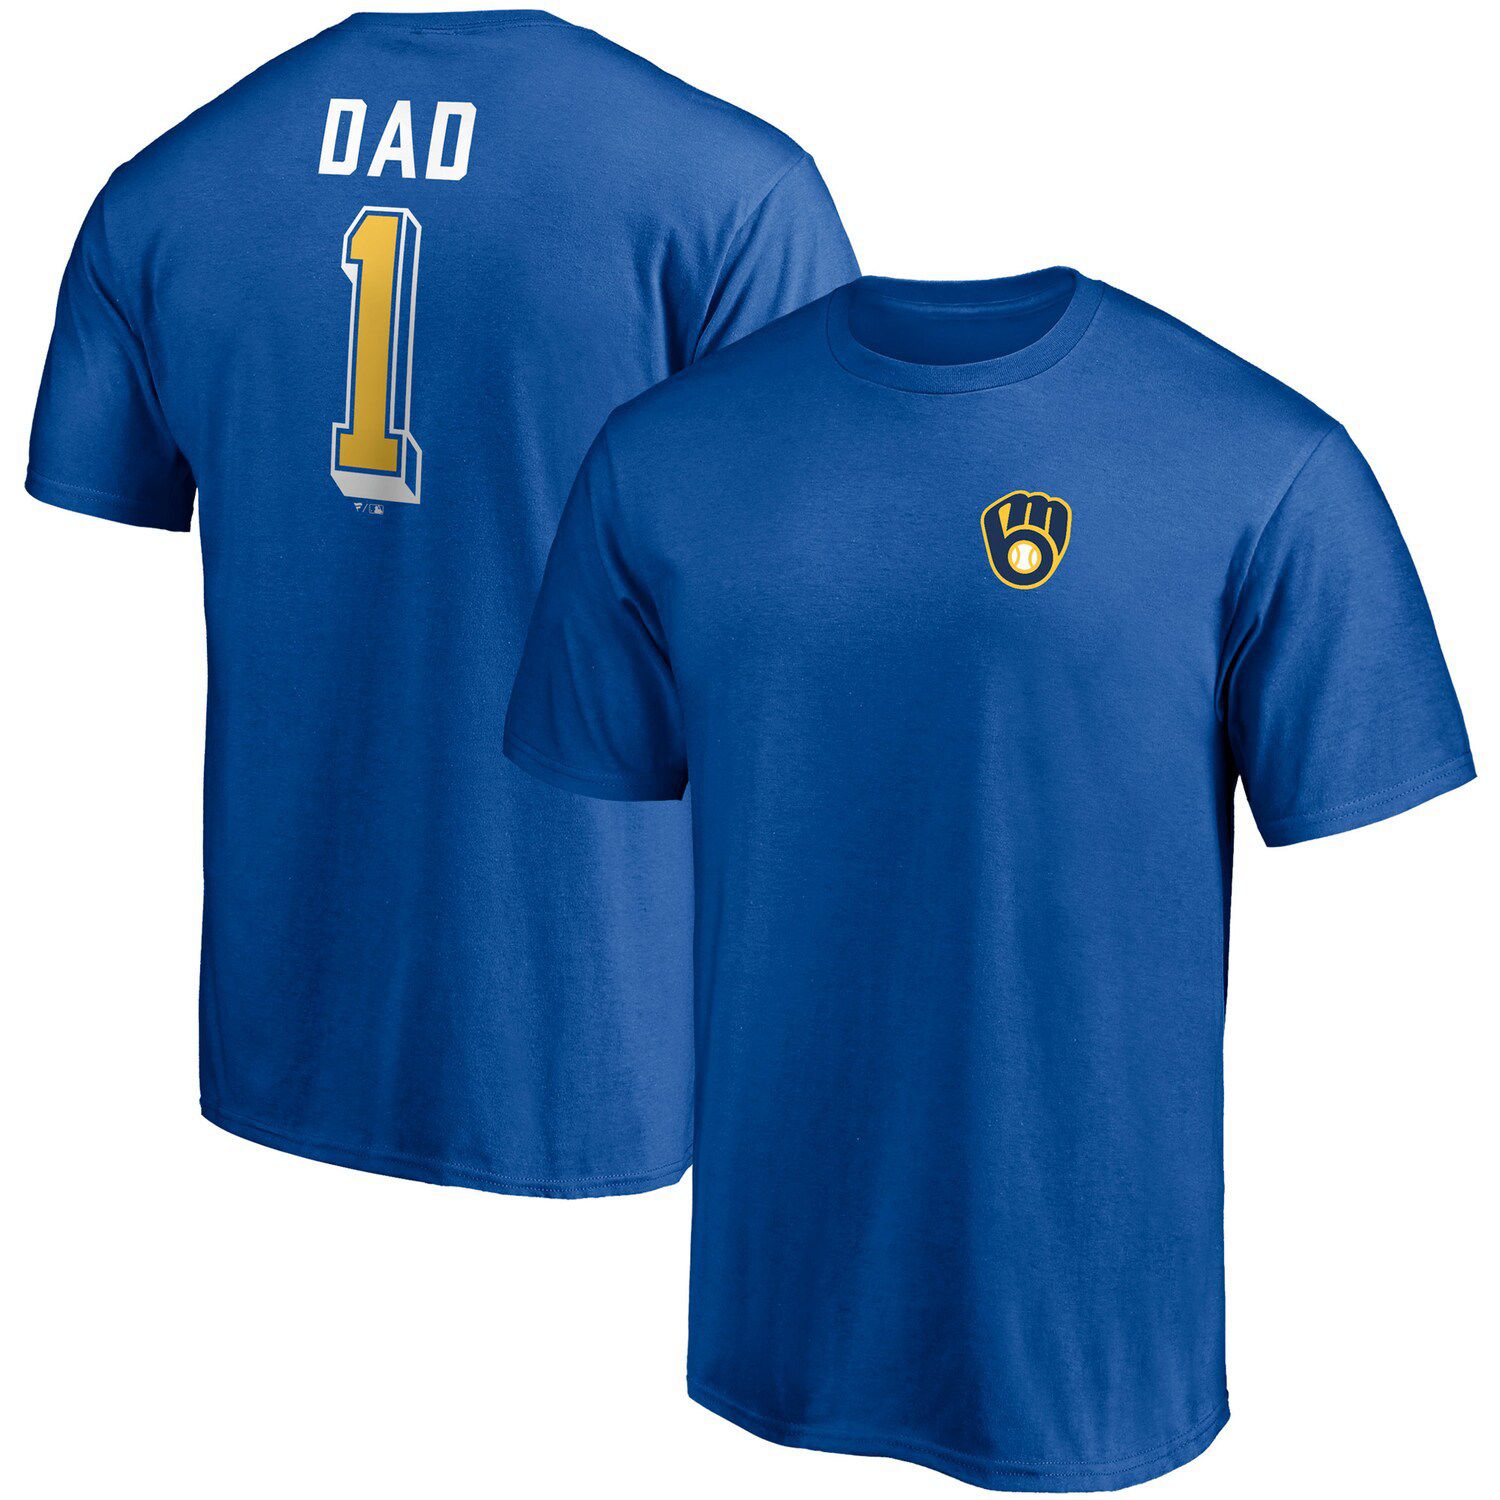 San Francisco Giants Fanatics Branded Number One Dad Team T-Shirt - Orange